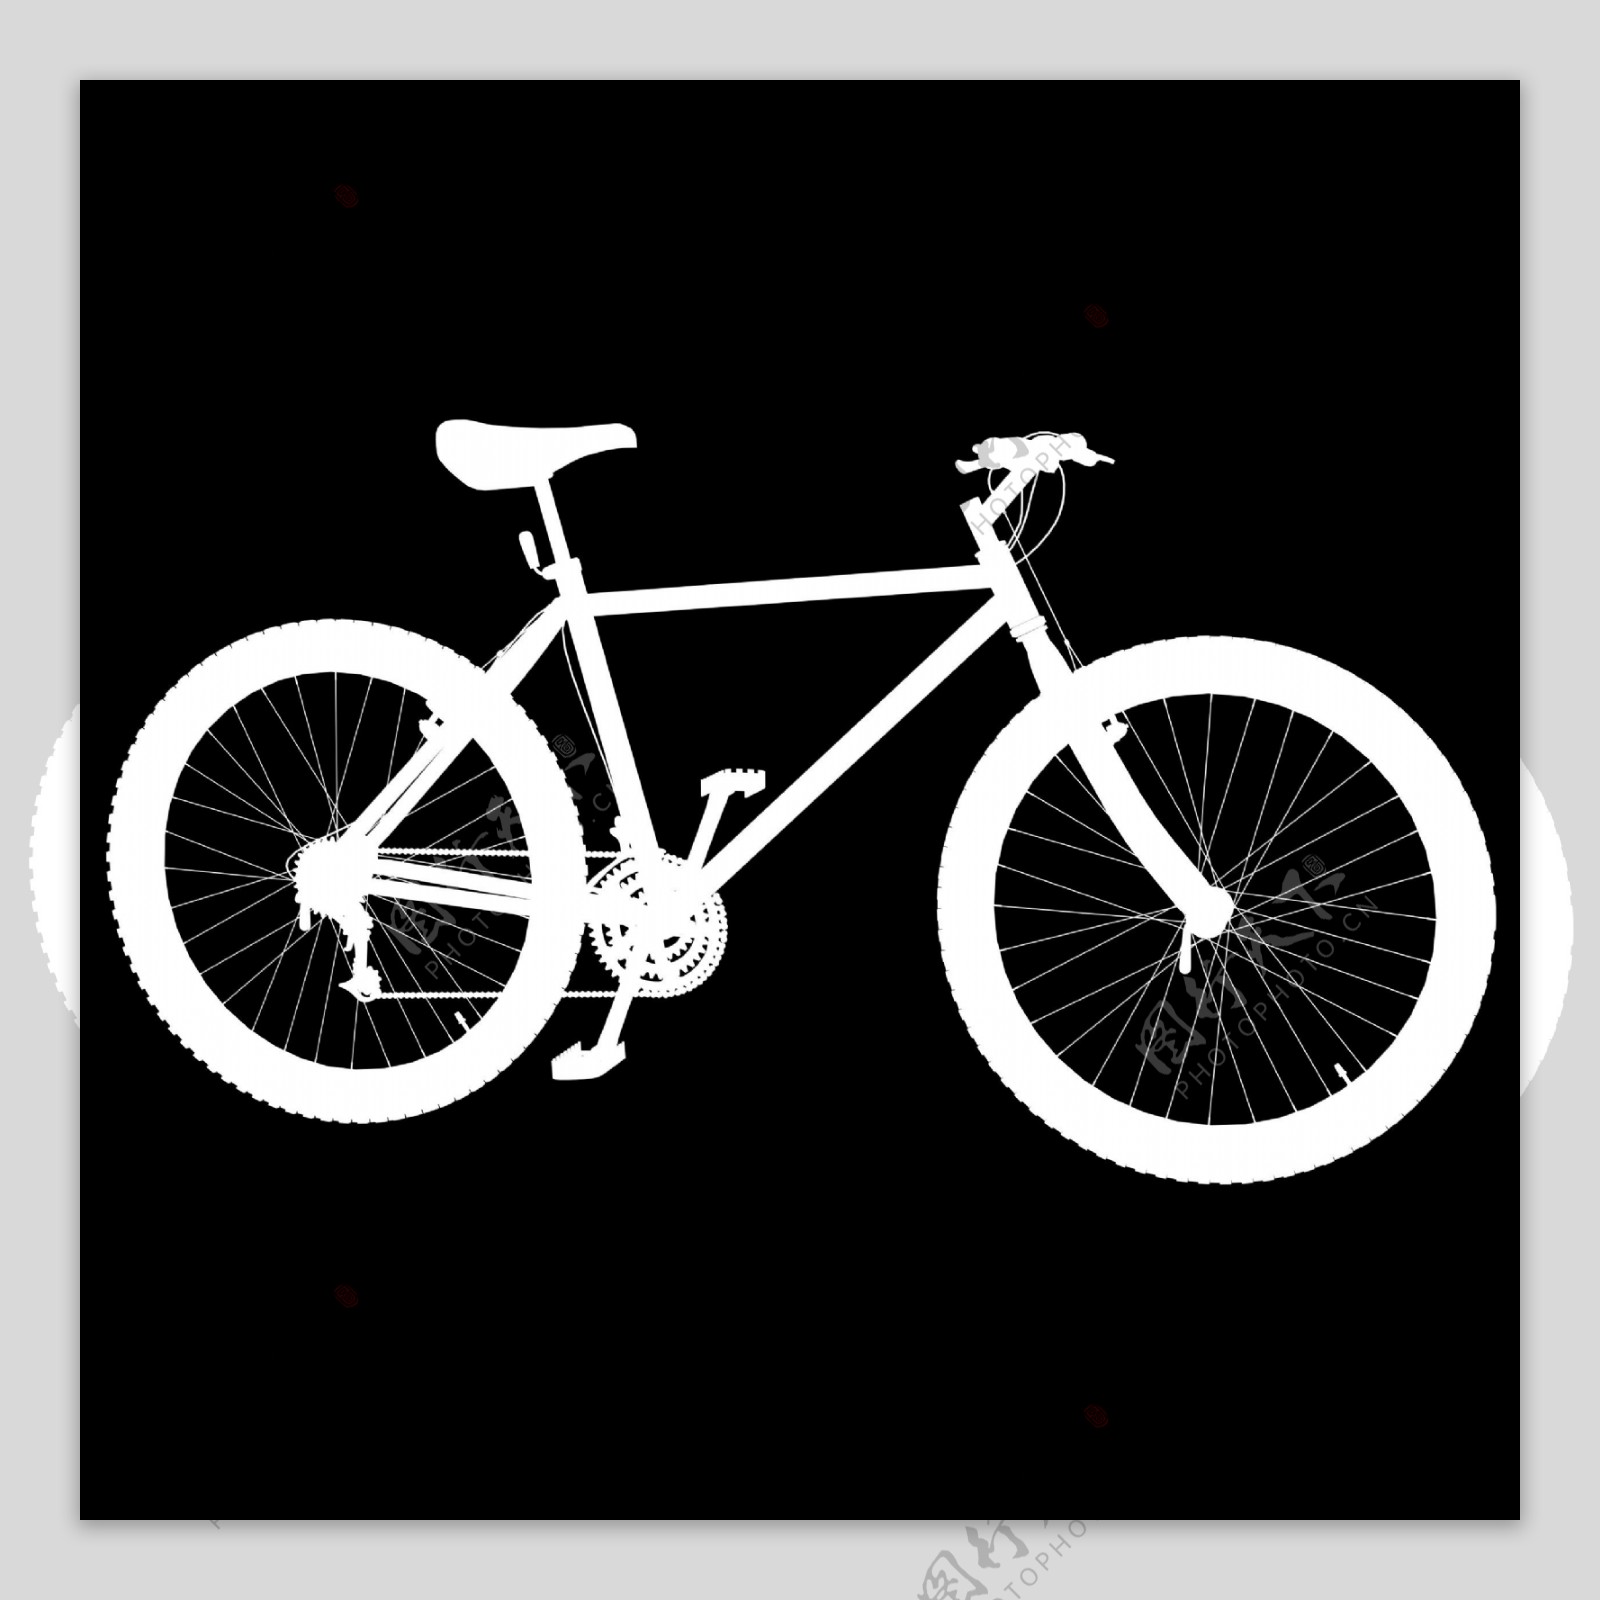 TrekBicycle自行车